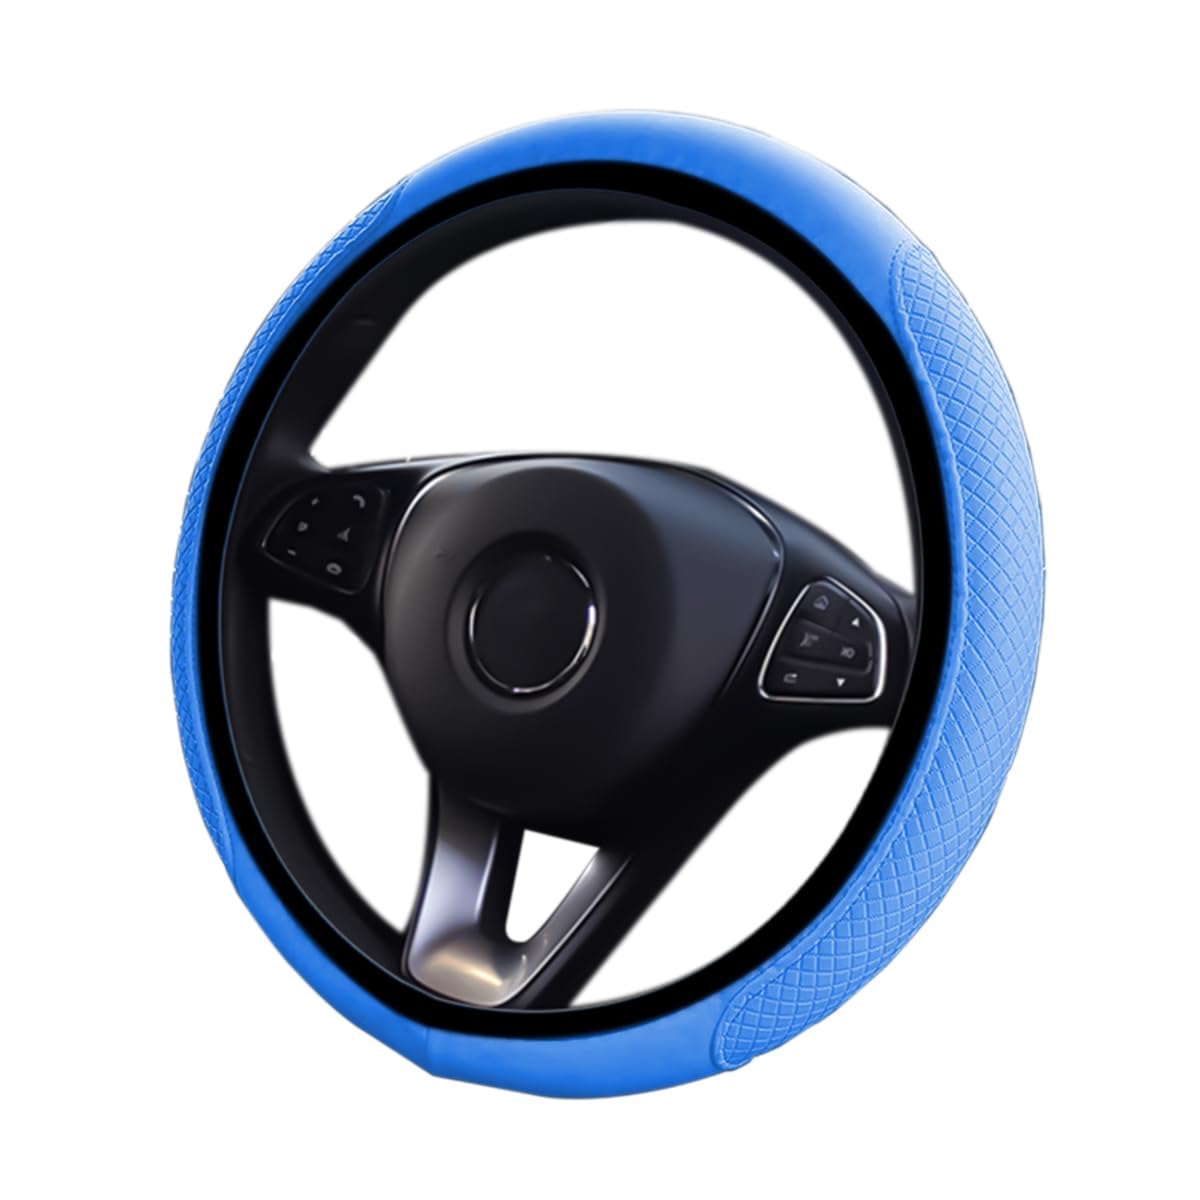 CGEAMDY Auto Lenkrad Abdeckung, Universal 38 cm Microfiber Lenkradhülle, Anti Rutsch Atmungsaktiv Lenkradabdeckung, Geruch frei Lenkradbezug Lenkradschoner(Blau) von CGEAMDY